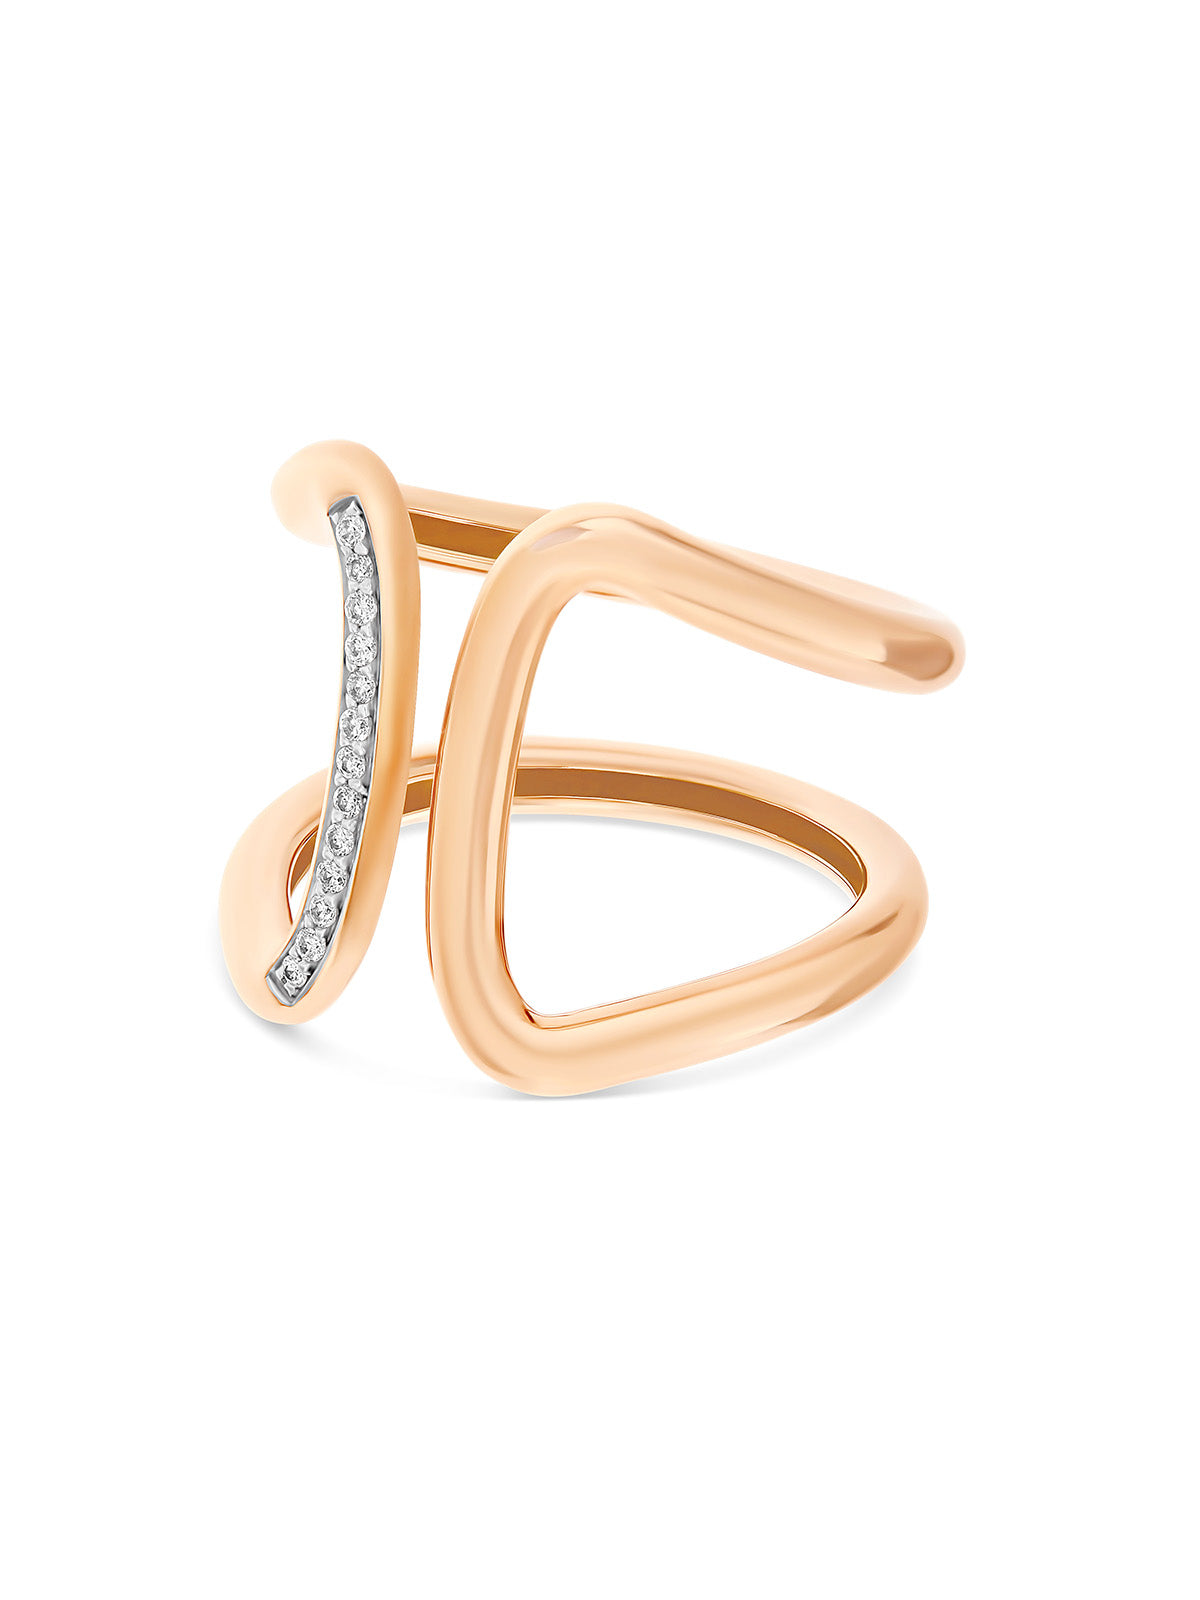 "Libera" rose gold and diamonds design band ring